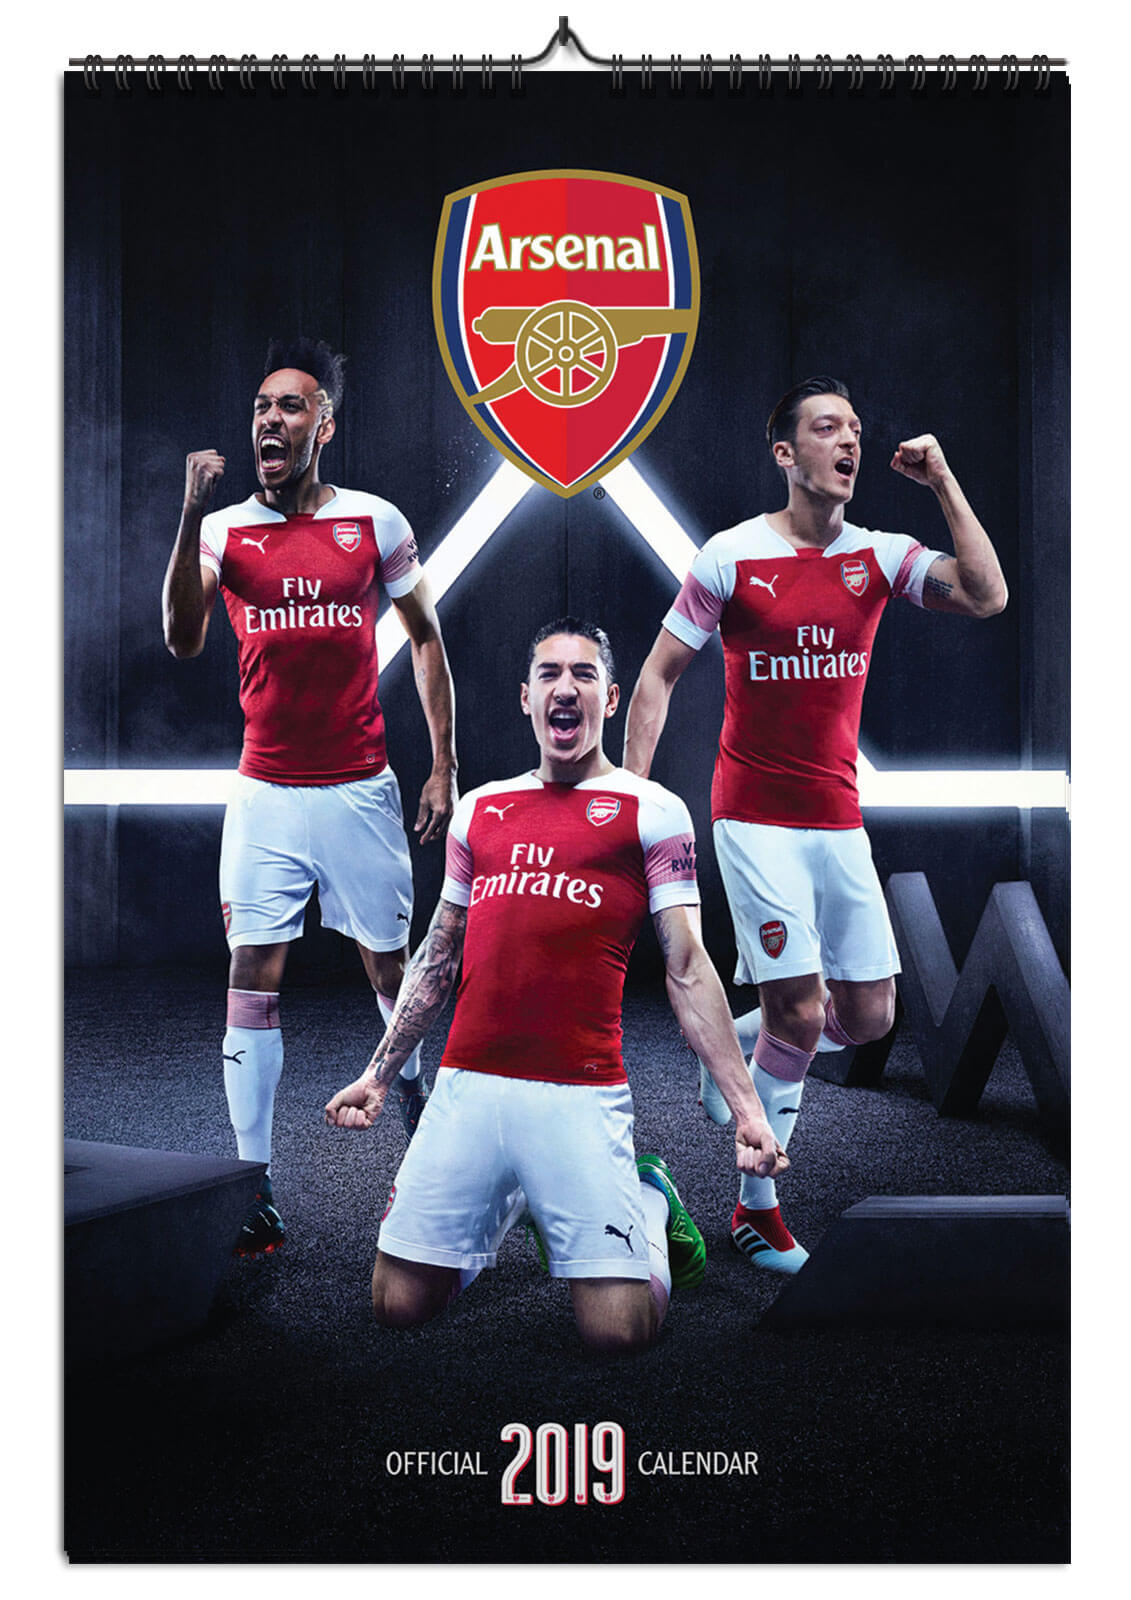 Kalendarz 2019 z klubem Arsenal